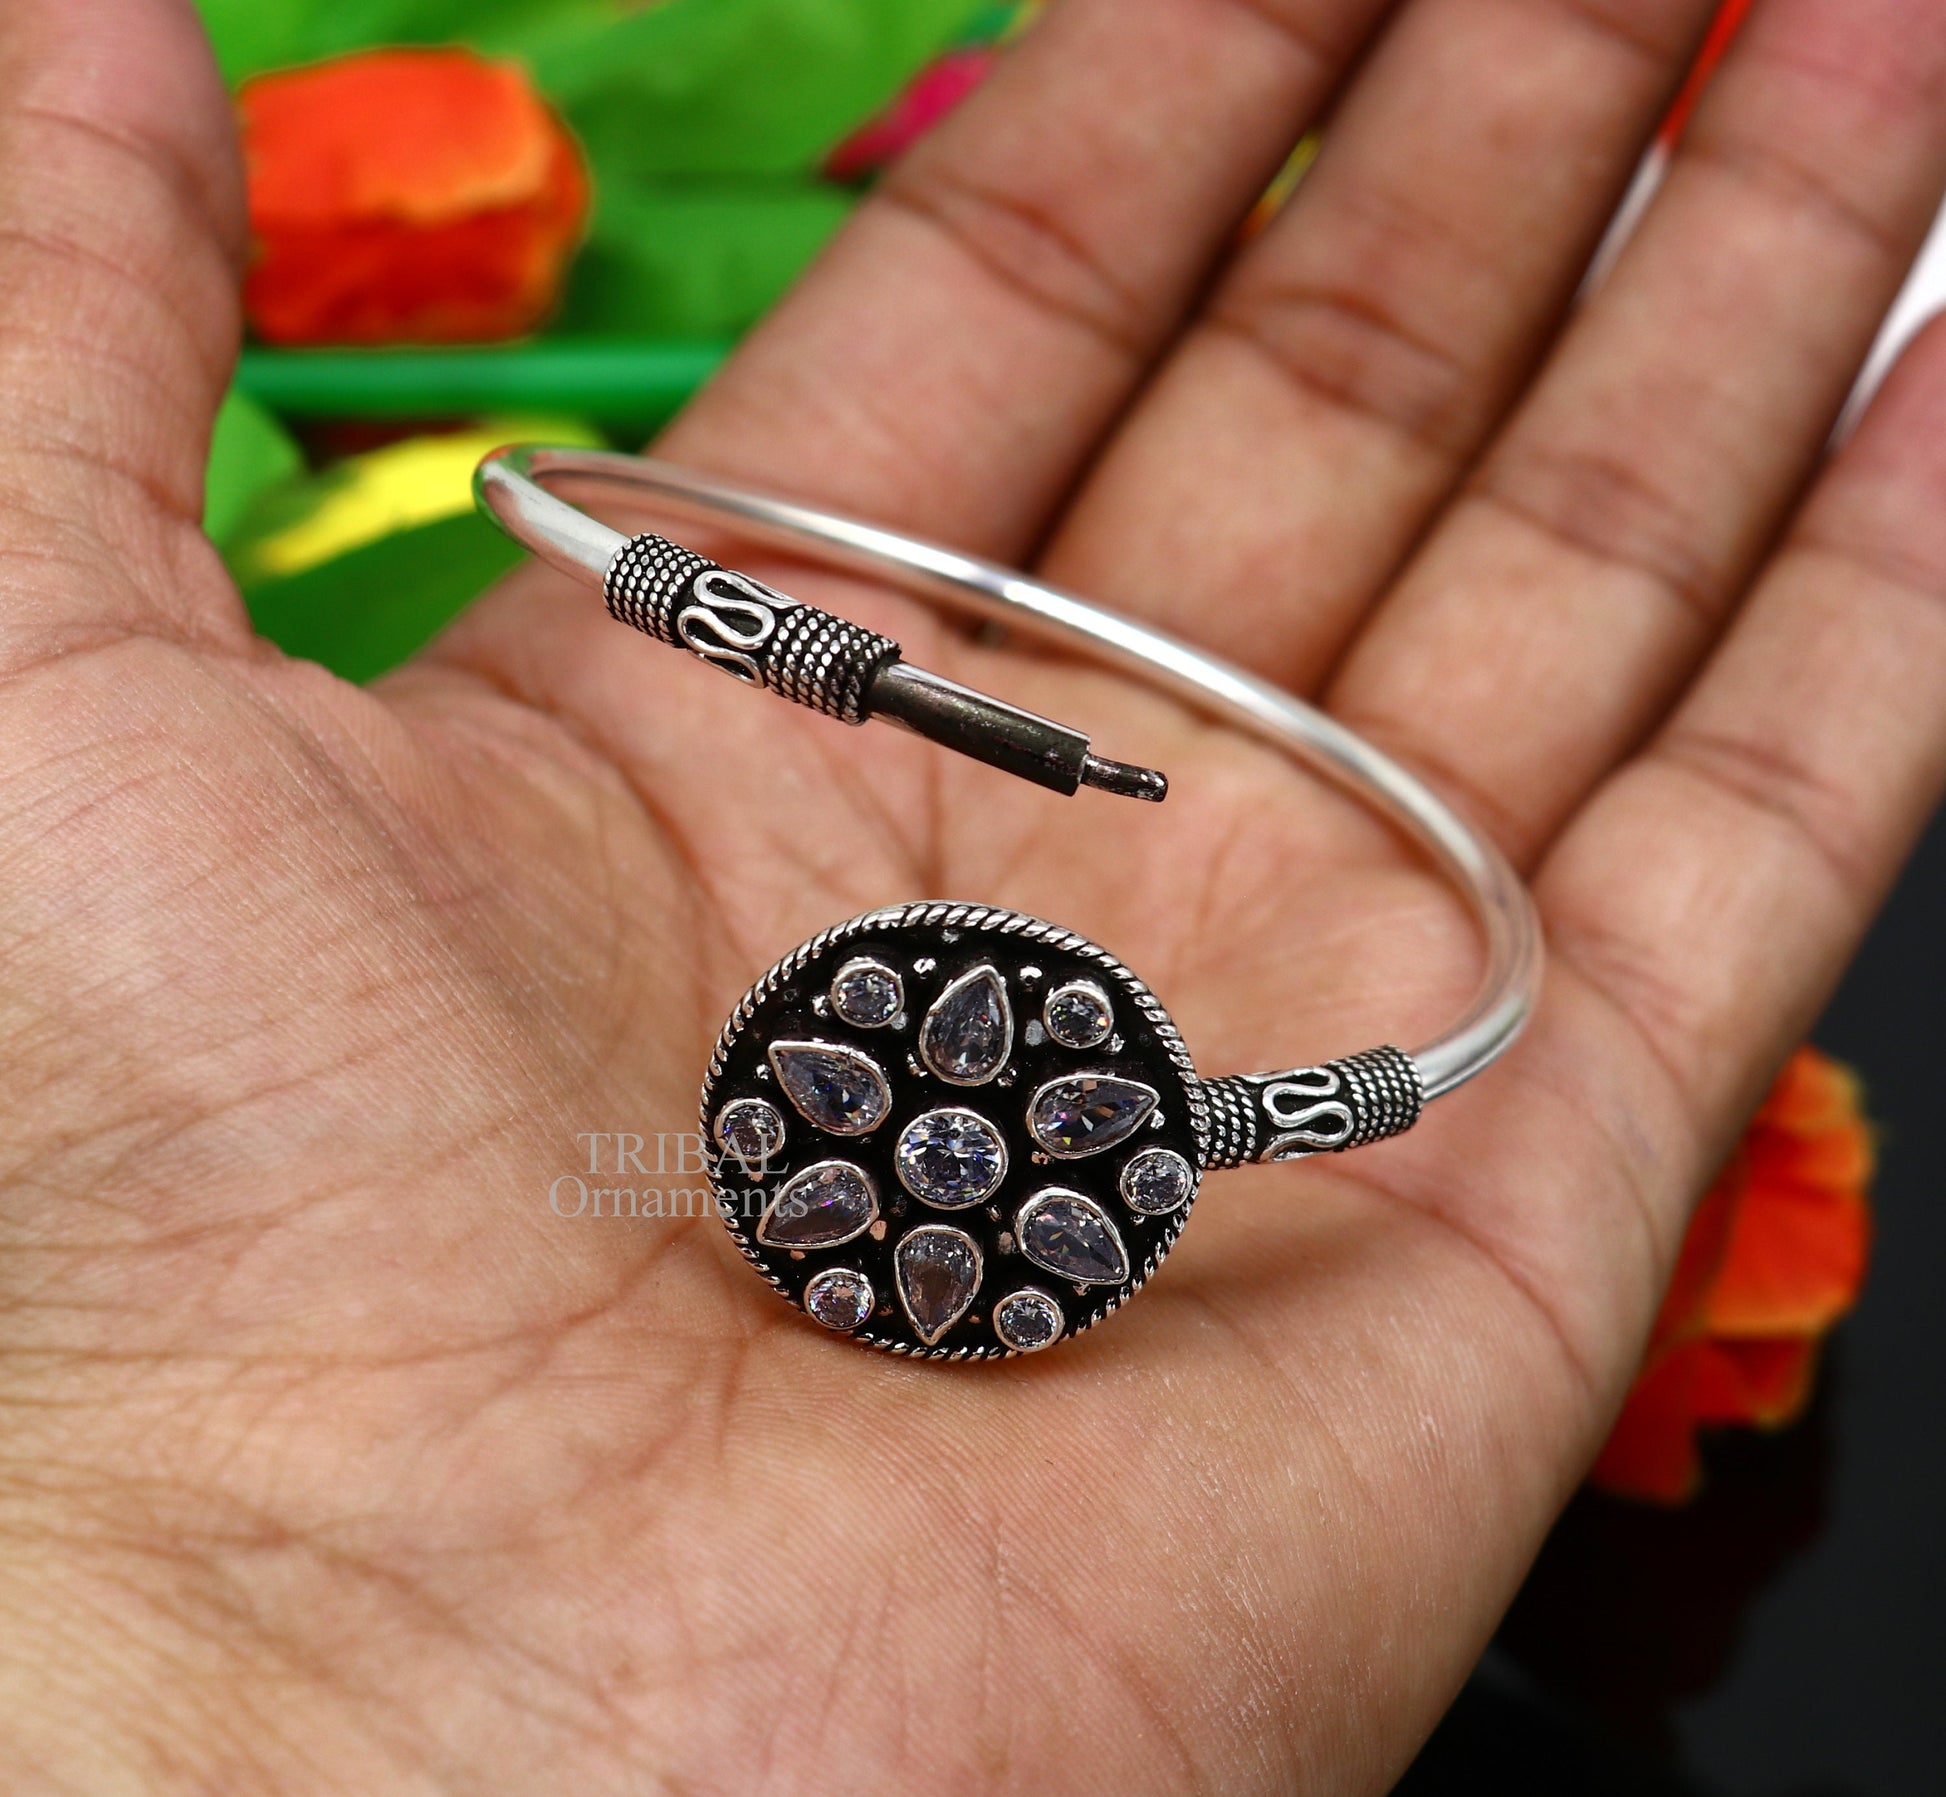 925 sterling silver fabulous cut stone handmade bangle bracelet cuff kada girl's gift customized personalized jewelry hnssk720 - TRIBAL ORNAMENTS